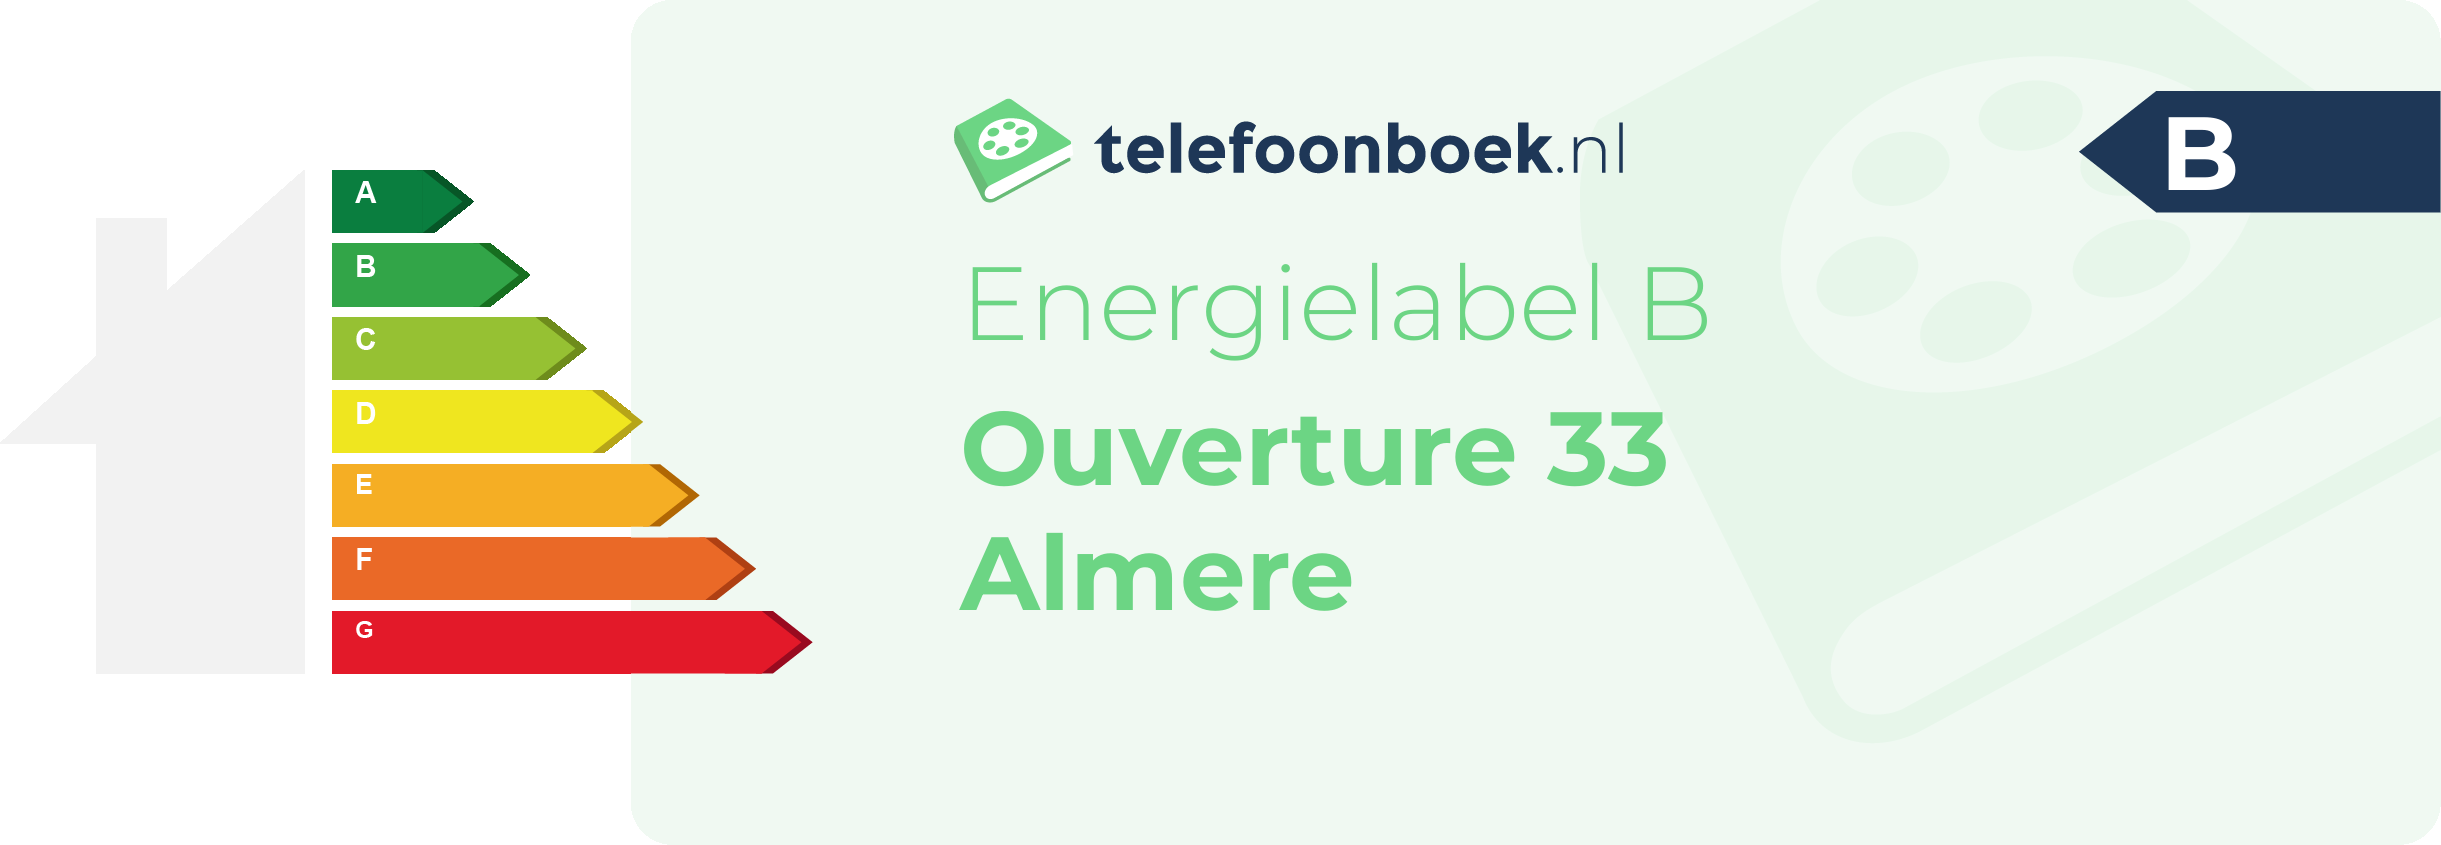 Energielabel Ouverture 33 Almere